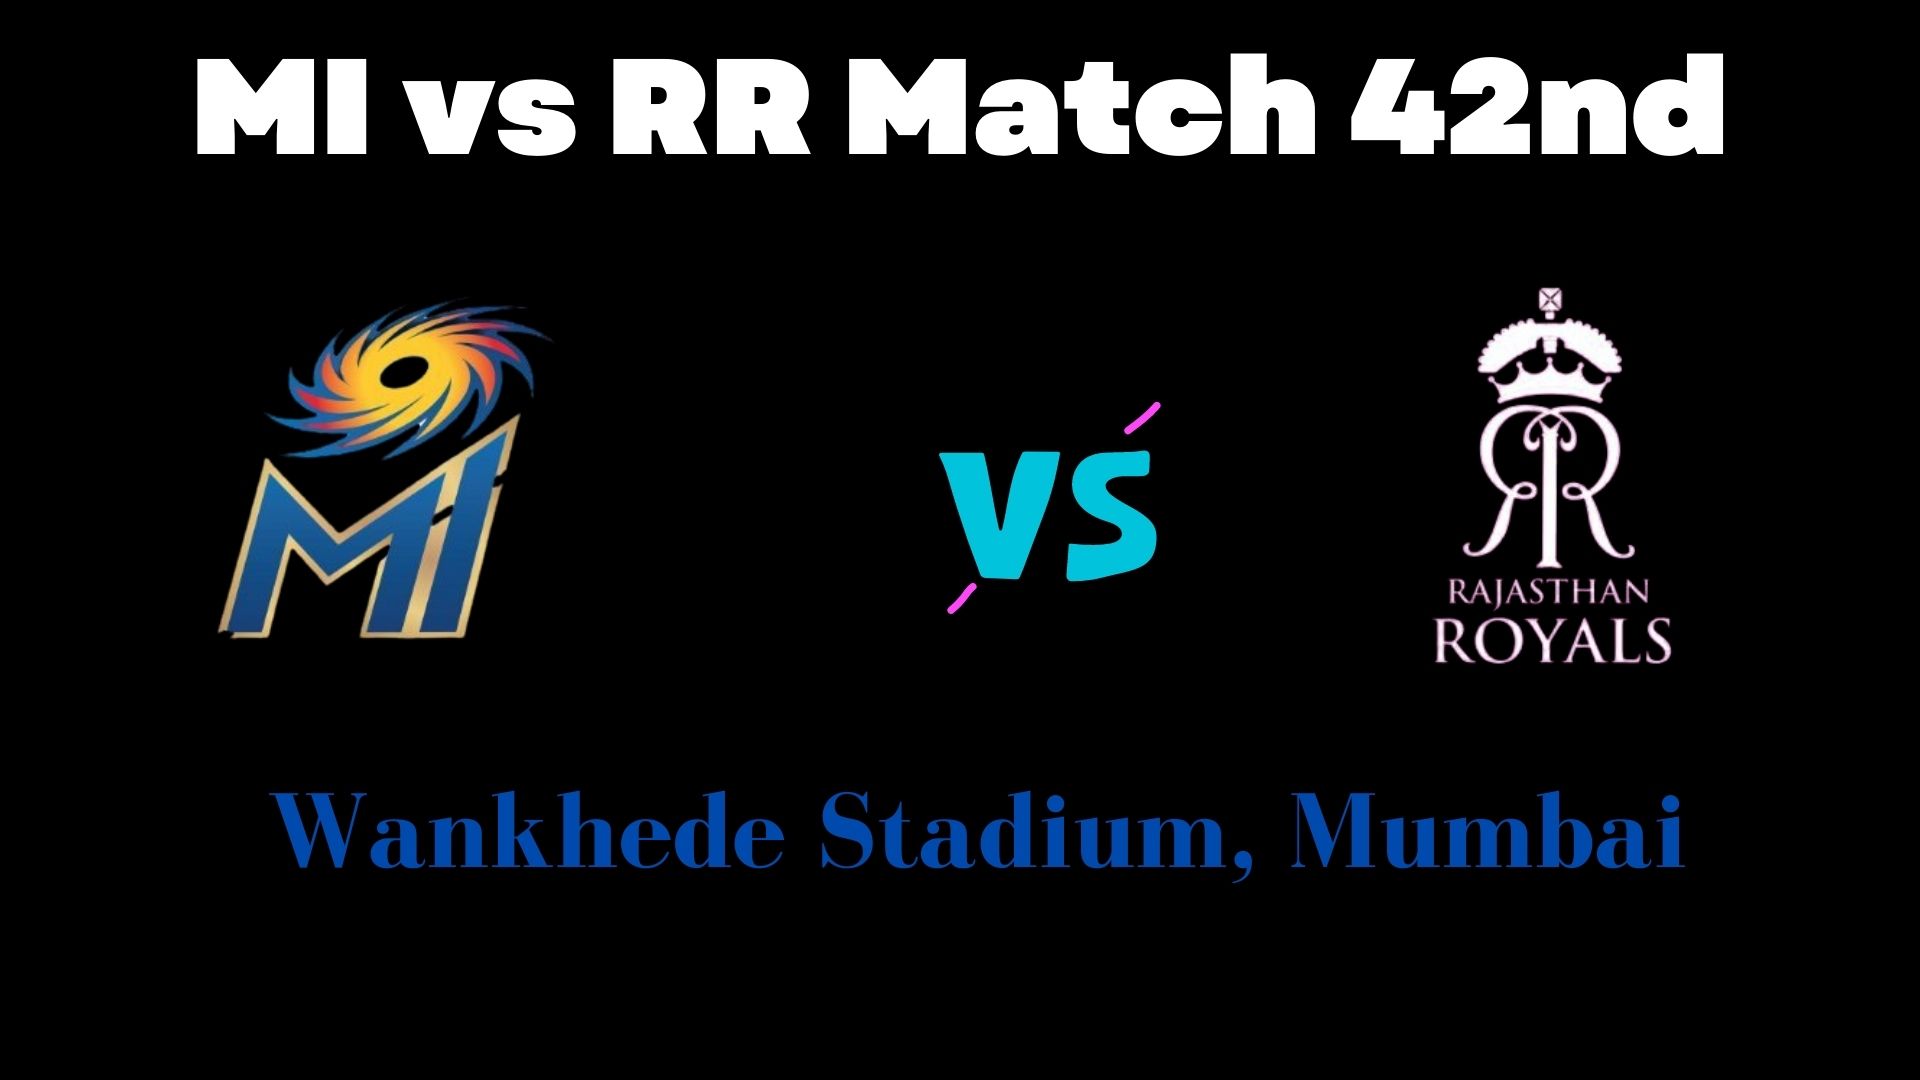 IPL 2023 News: MI vs RR Match 42nd Dream11 Prediction, IPL Fantasy Cricket, Playing XI, Pitch Report & Injury Updates For Match 42nd of IPL 2023 | MI vs RR Match 412nd Head to head